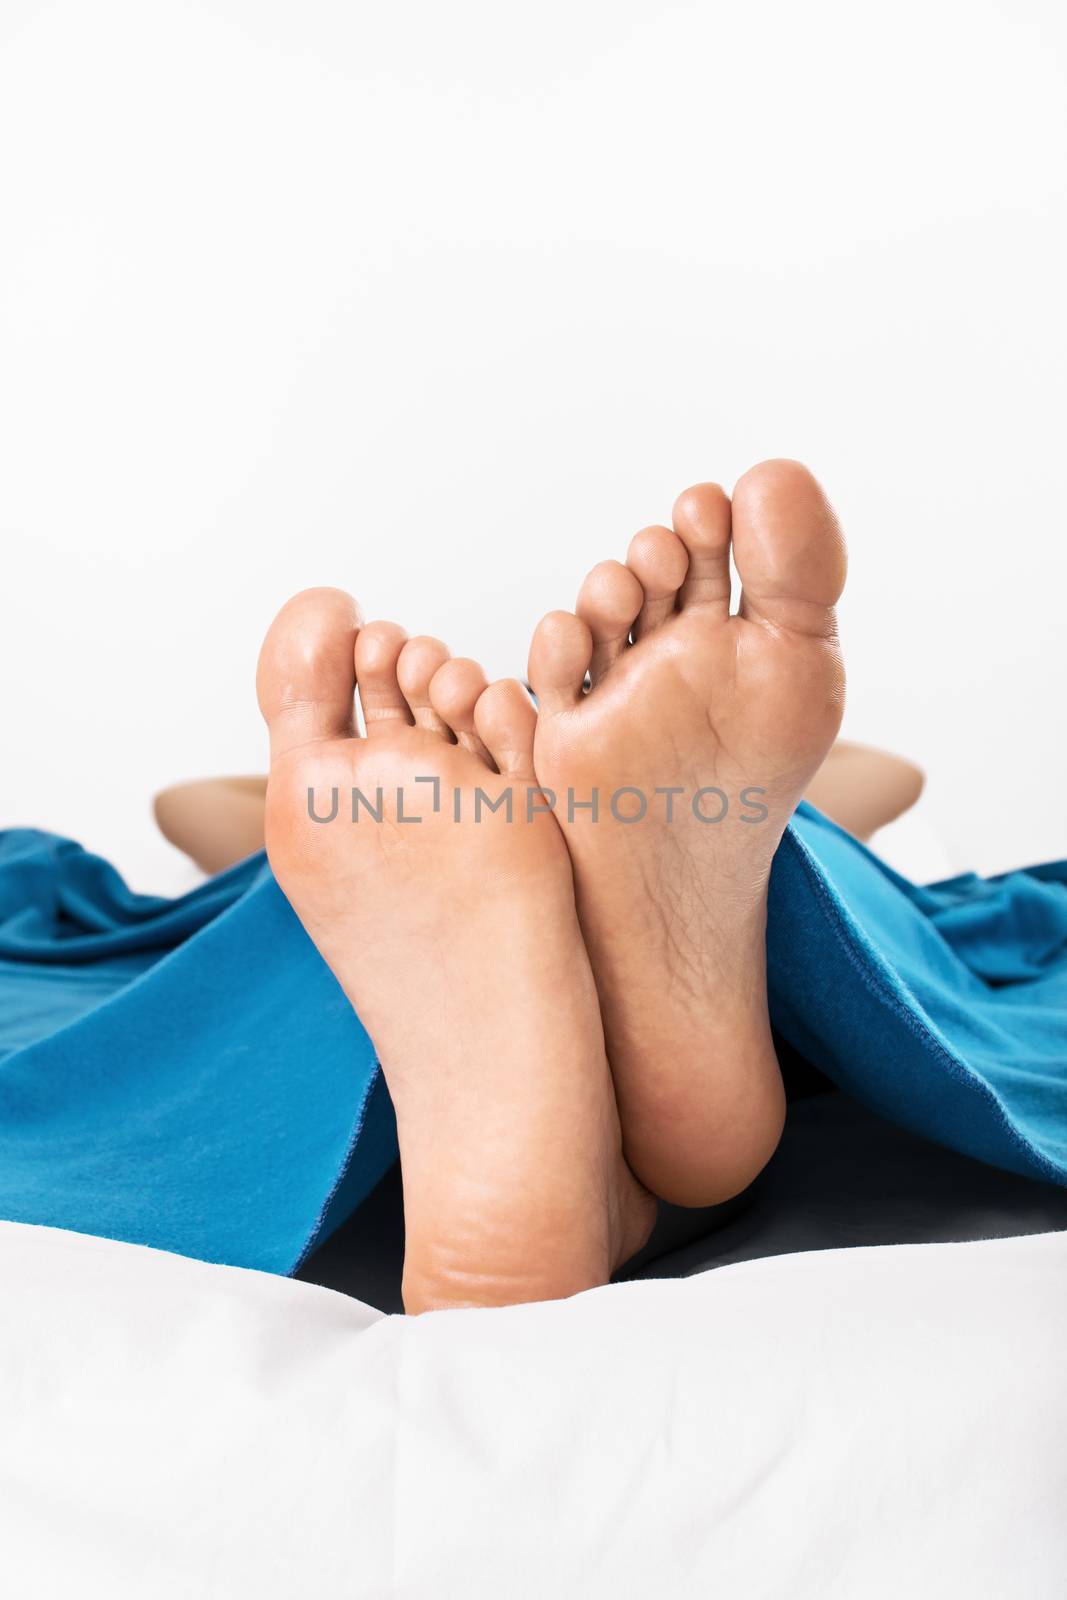 Feet up, relaxing by Mendelex